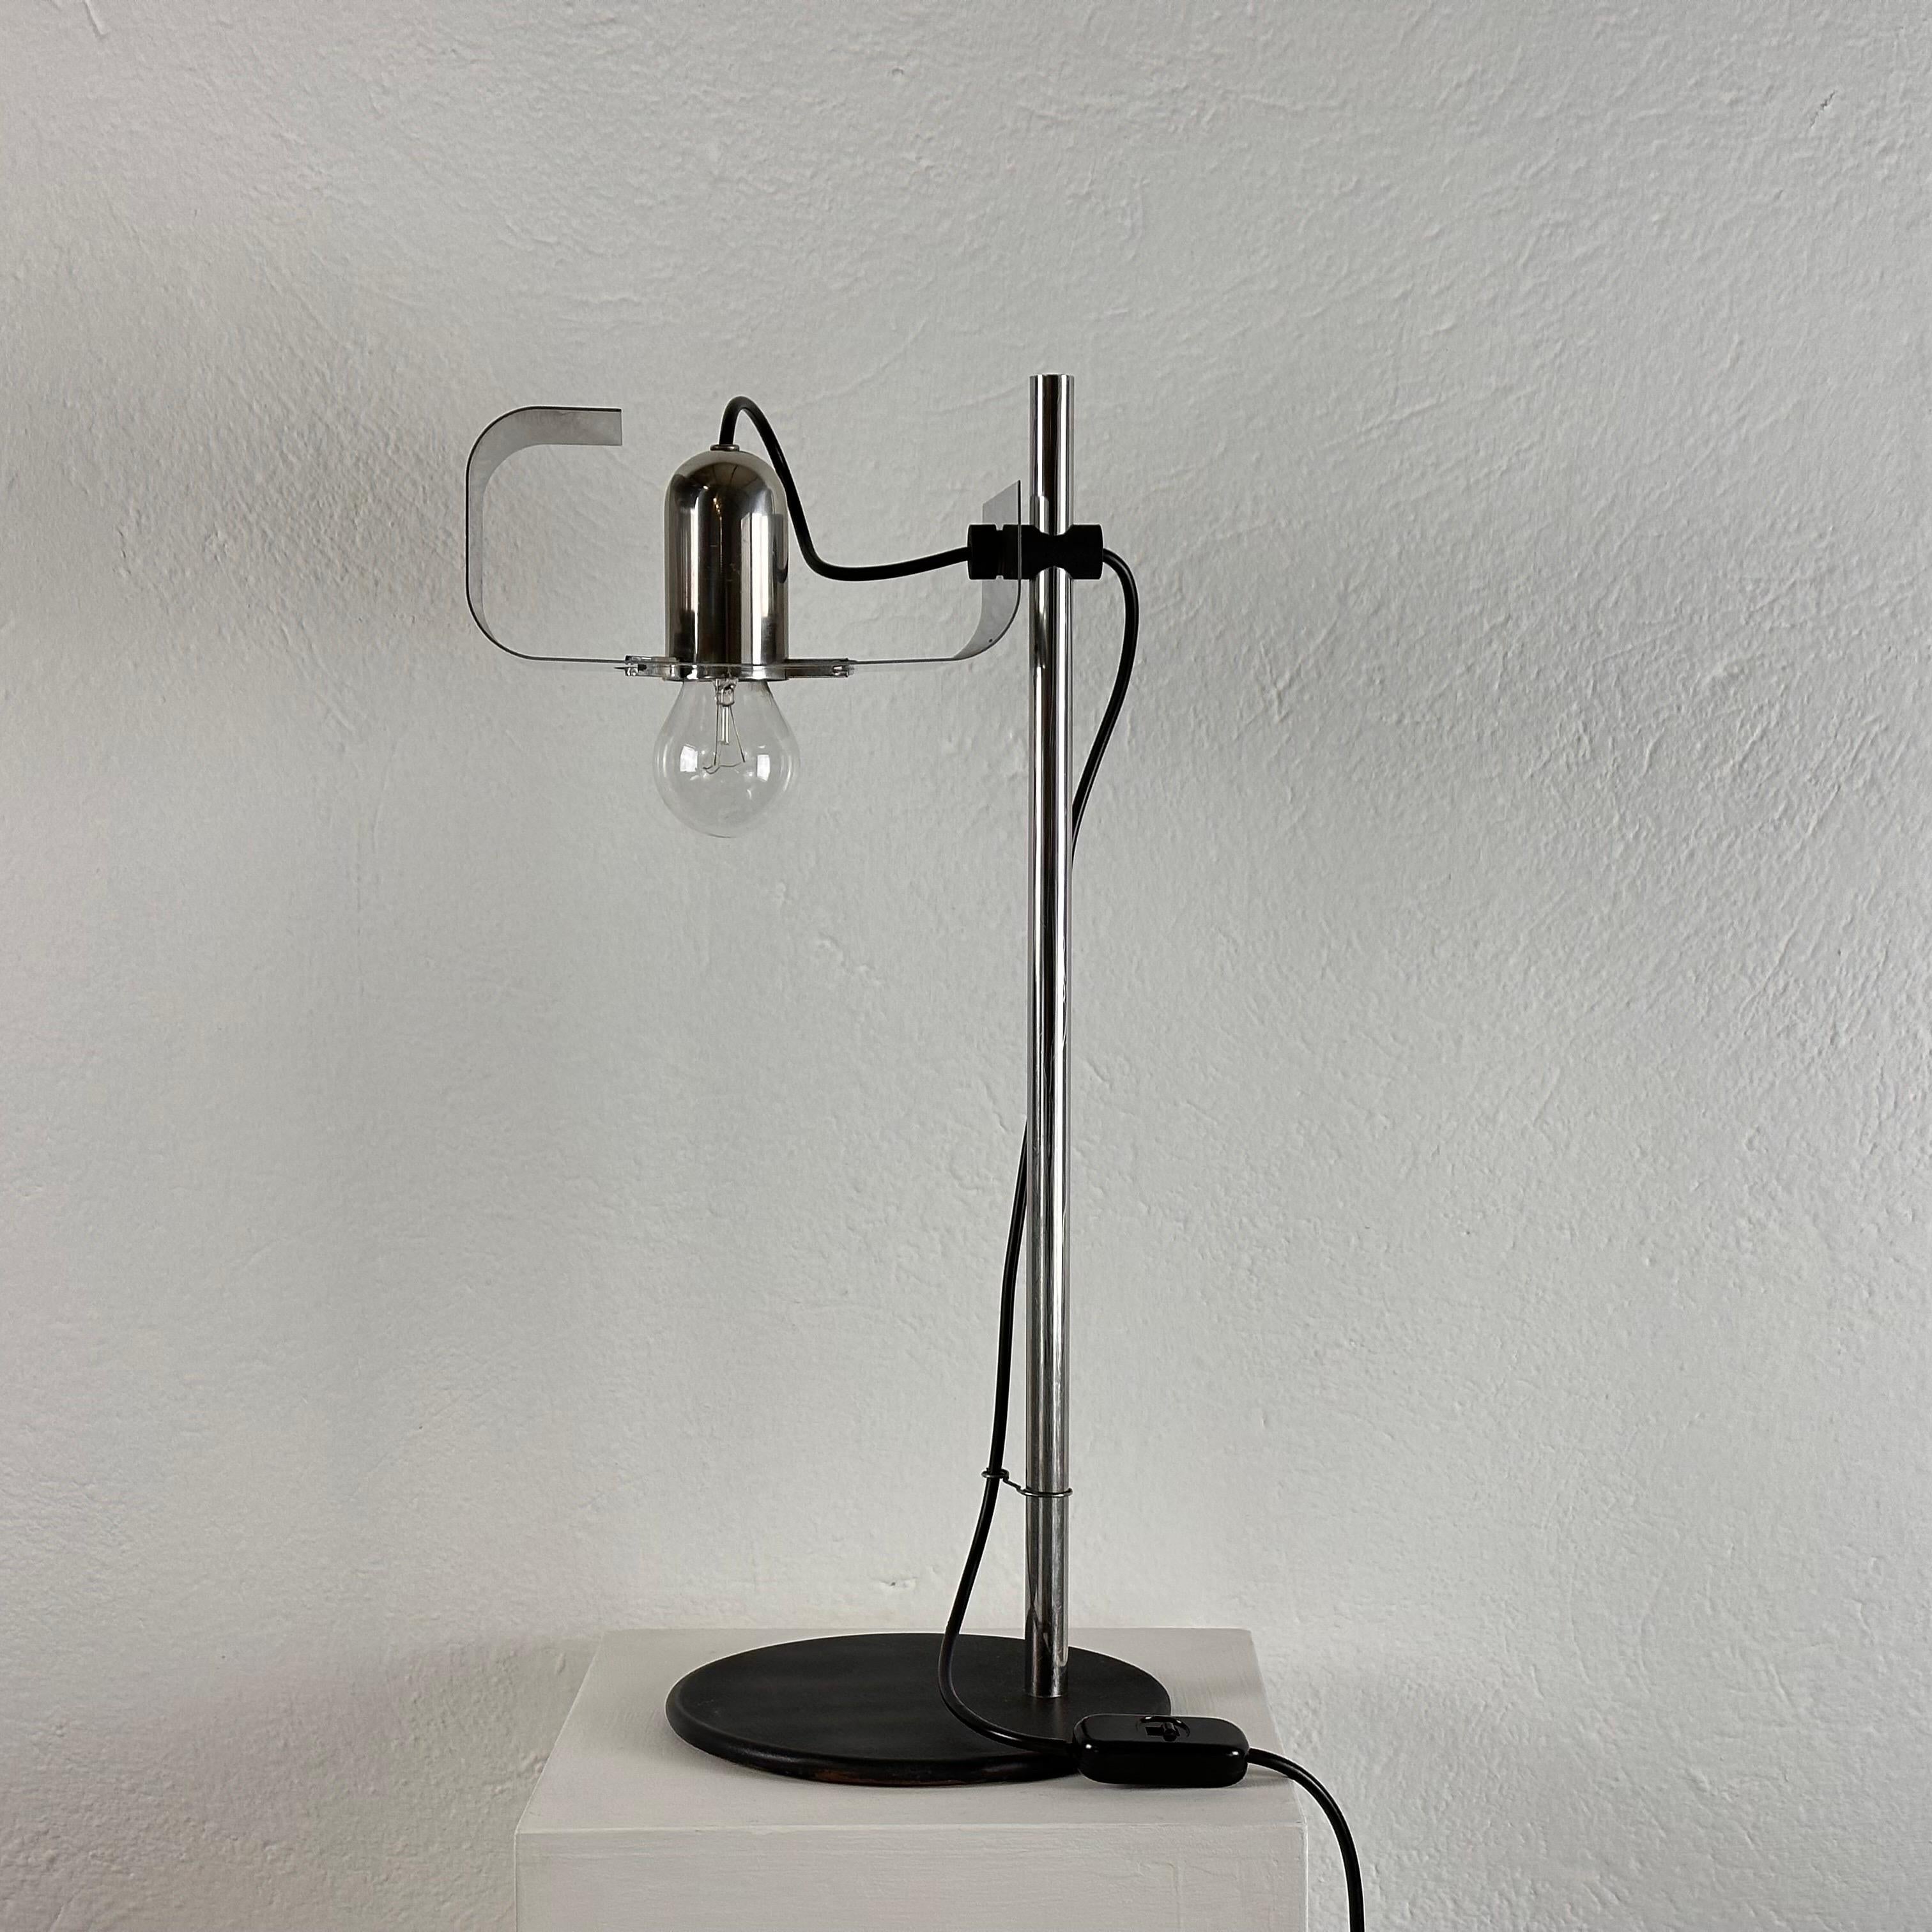 Mid-20th Century Vintage Lamperti Italian Large Table Lamp - 1960s Chromed Steel Elegance For Sale